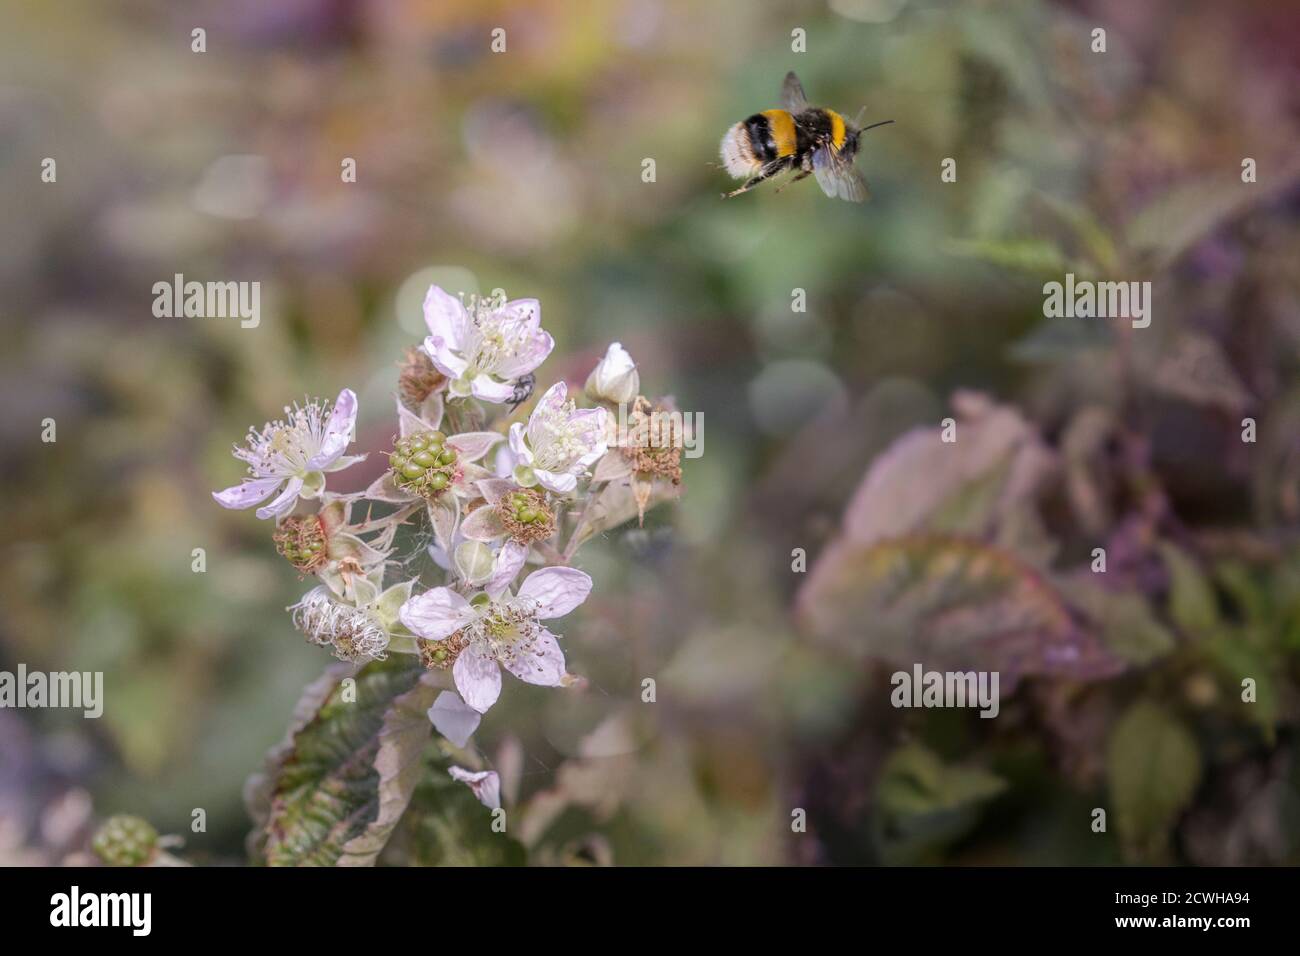 bumblebee on flying over brambles Stock Photo